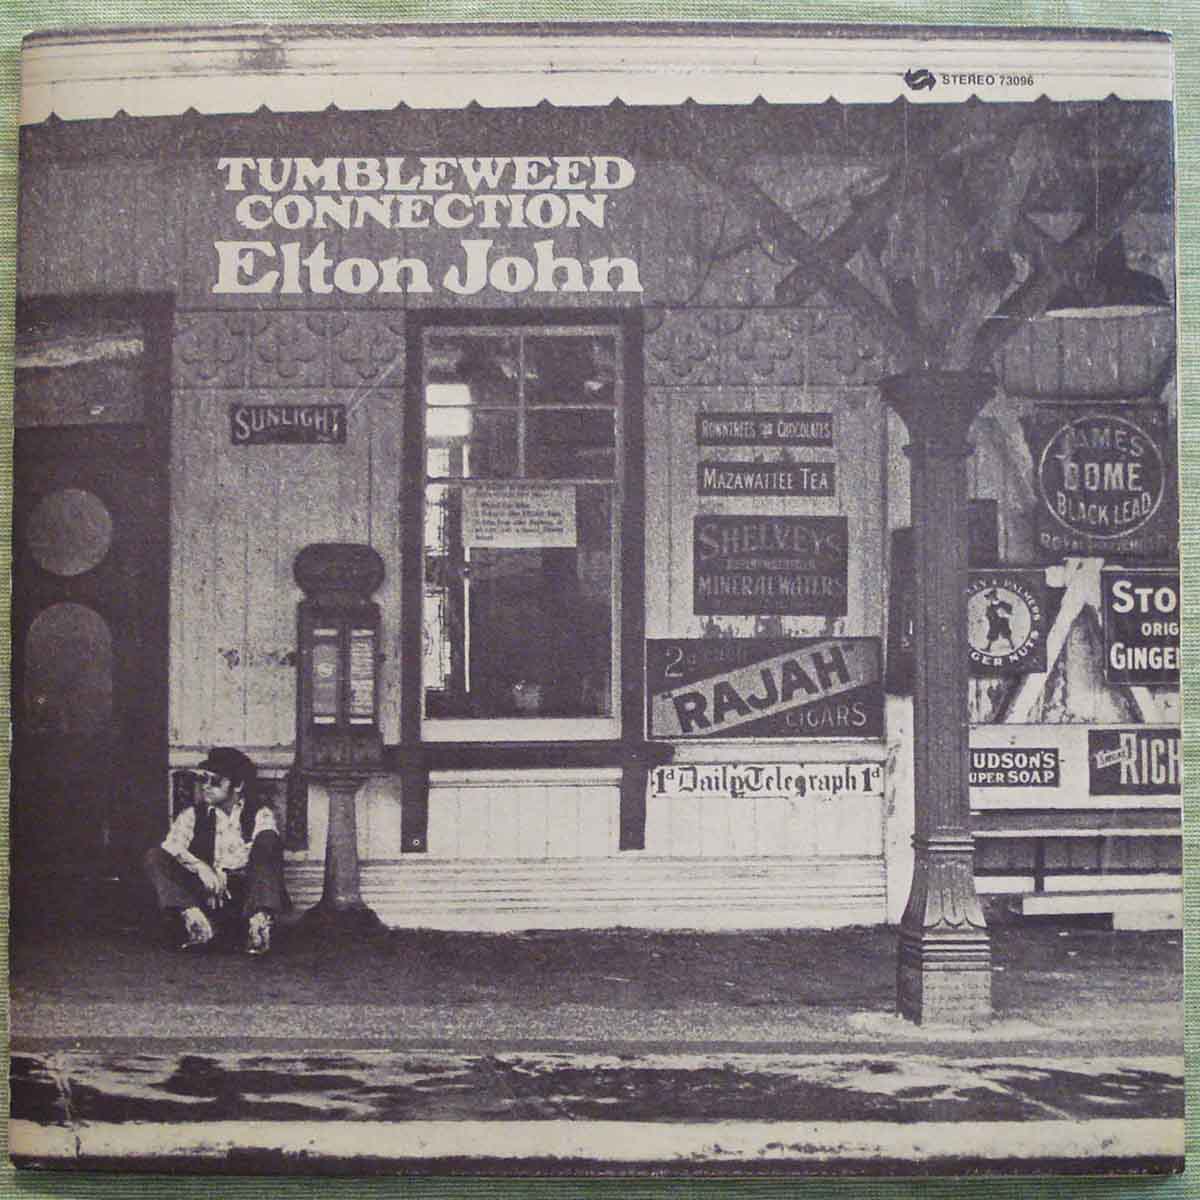 Elton John - Tumbleweed Connection (1970) Vinyl LP 33rpm, 73096